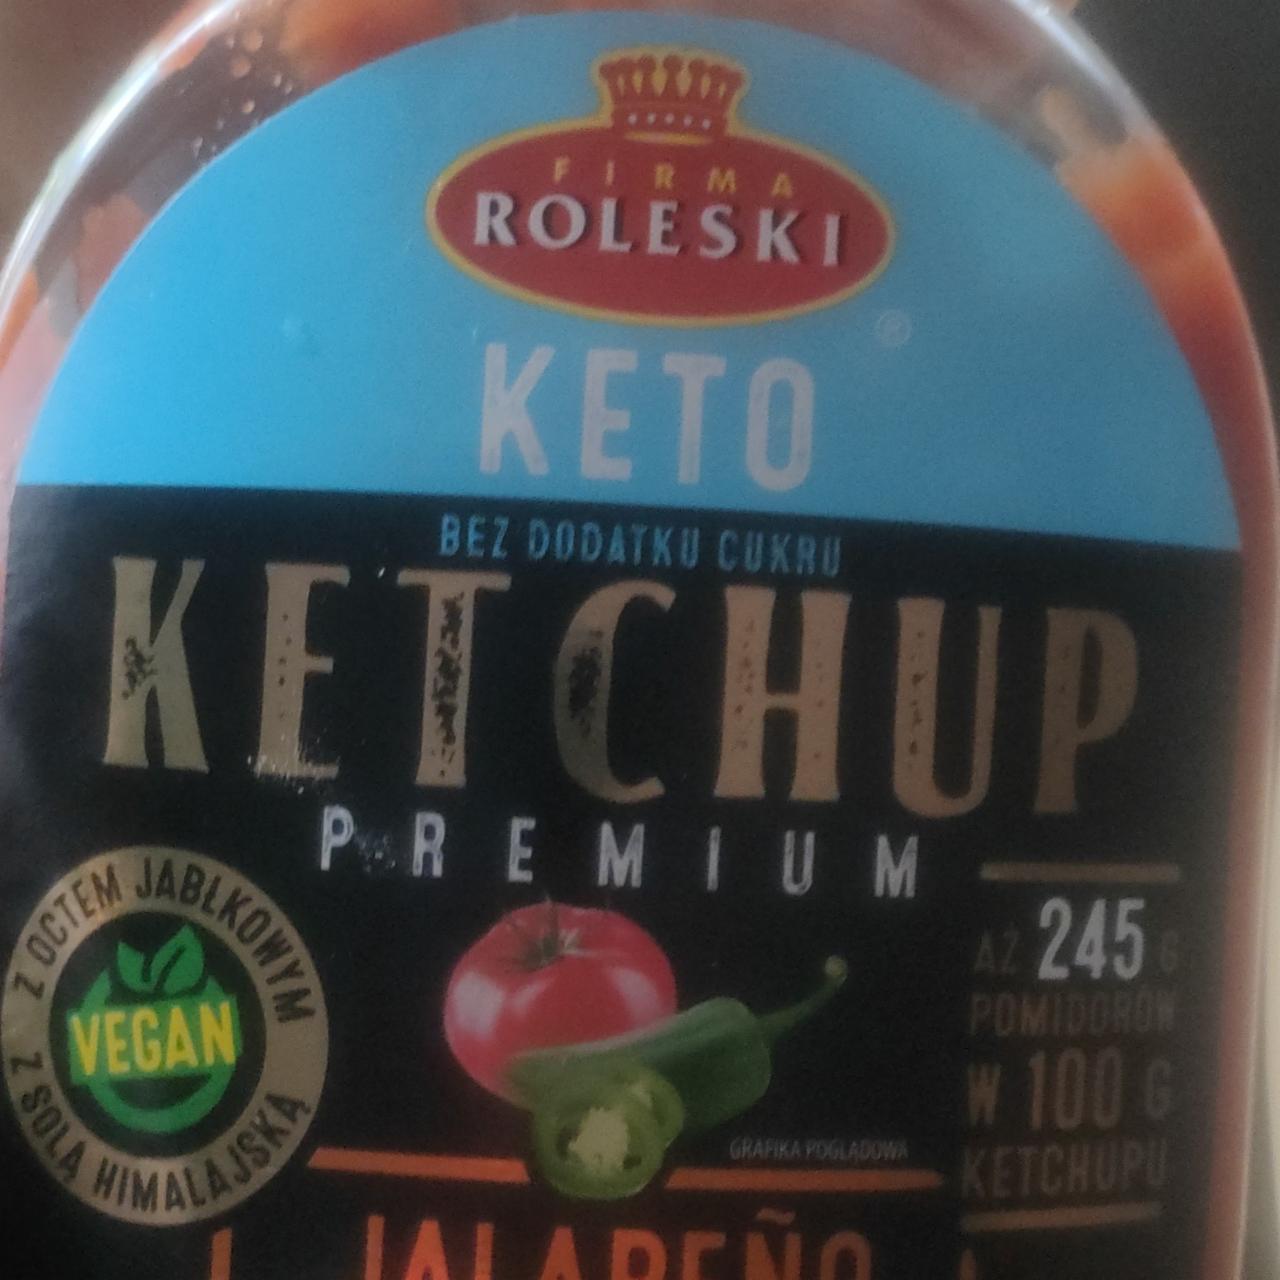 Zdjęcia - Ketchup jalapeño keto Roleski